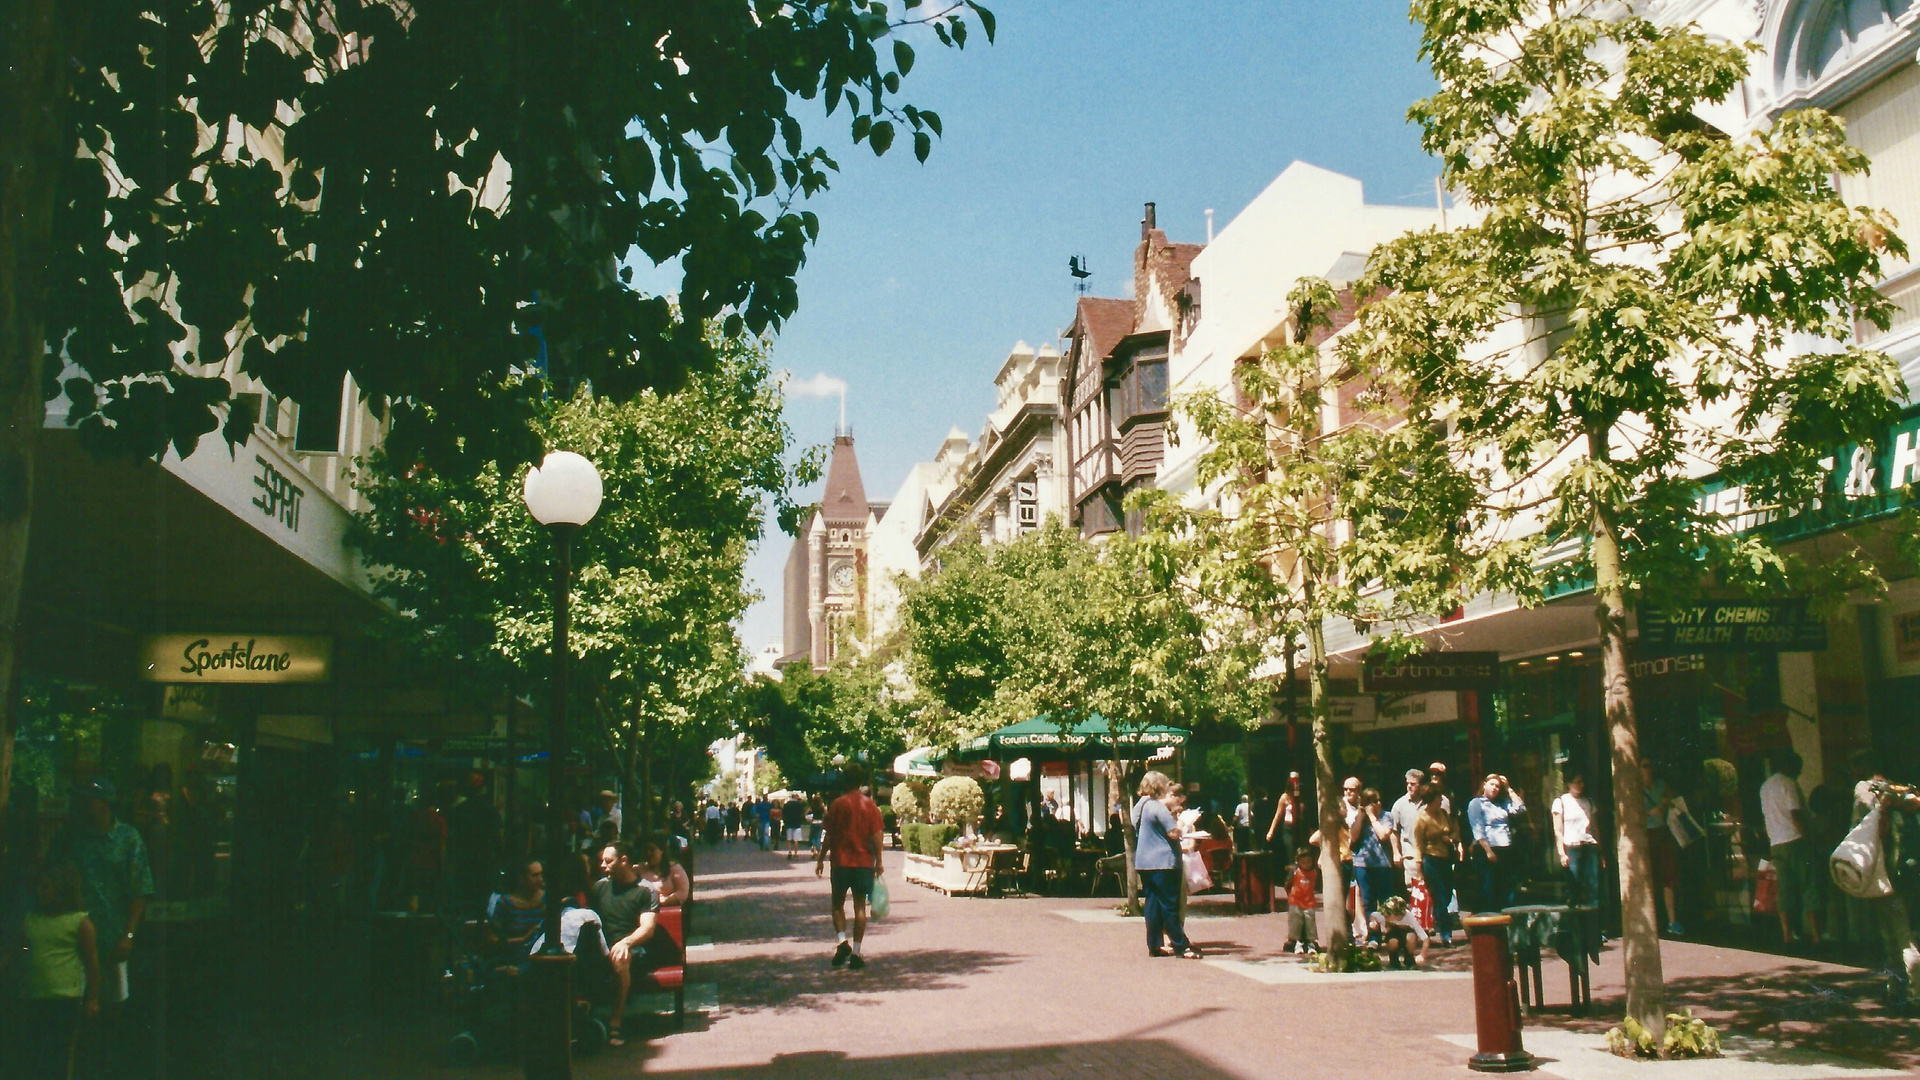 Australien (2001), Perth